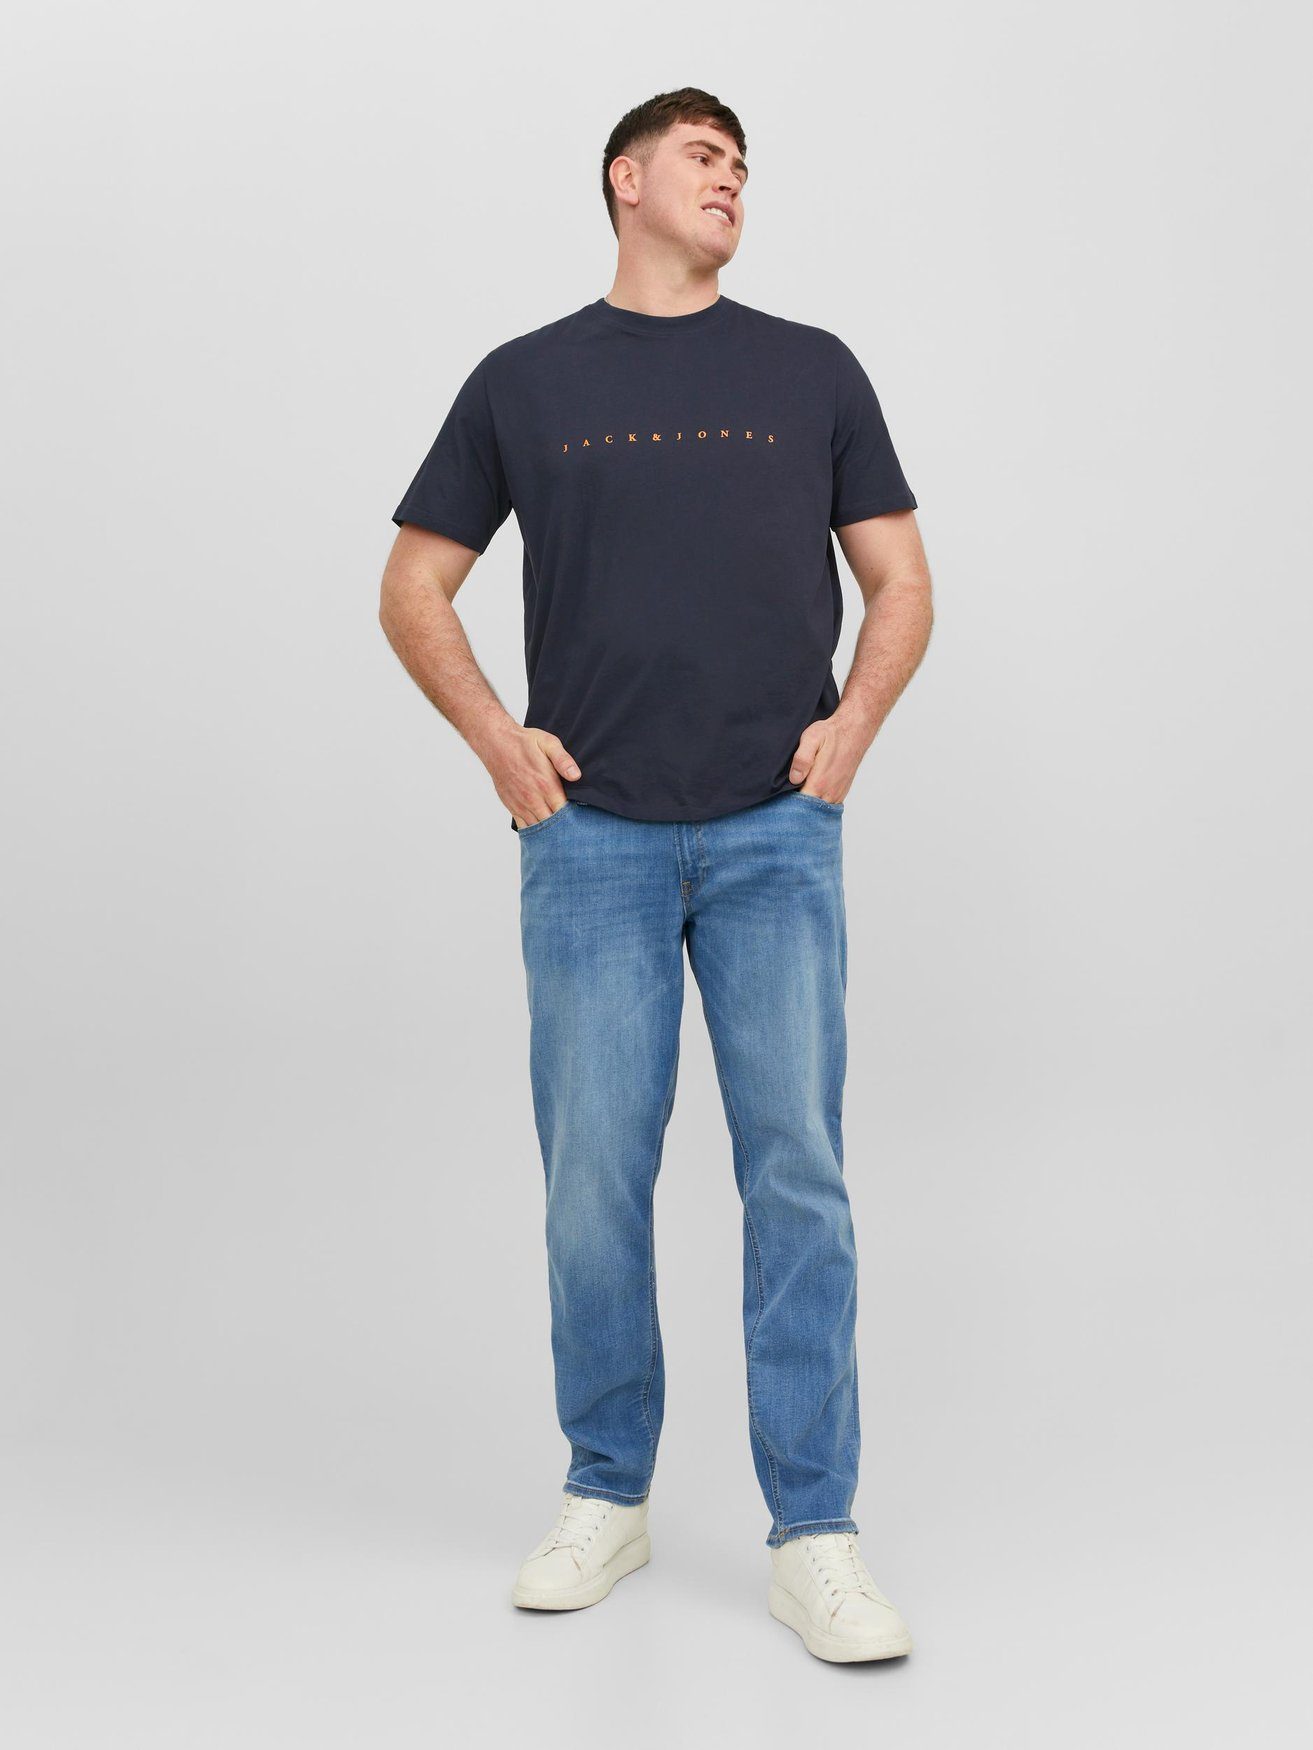 Jack & Jones T-Shirt Logo Size Plus T-Shirt Shirt Dunkelblau Übergröße in Kurzarm 6550 JJESTAR